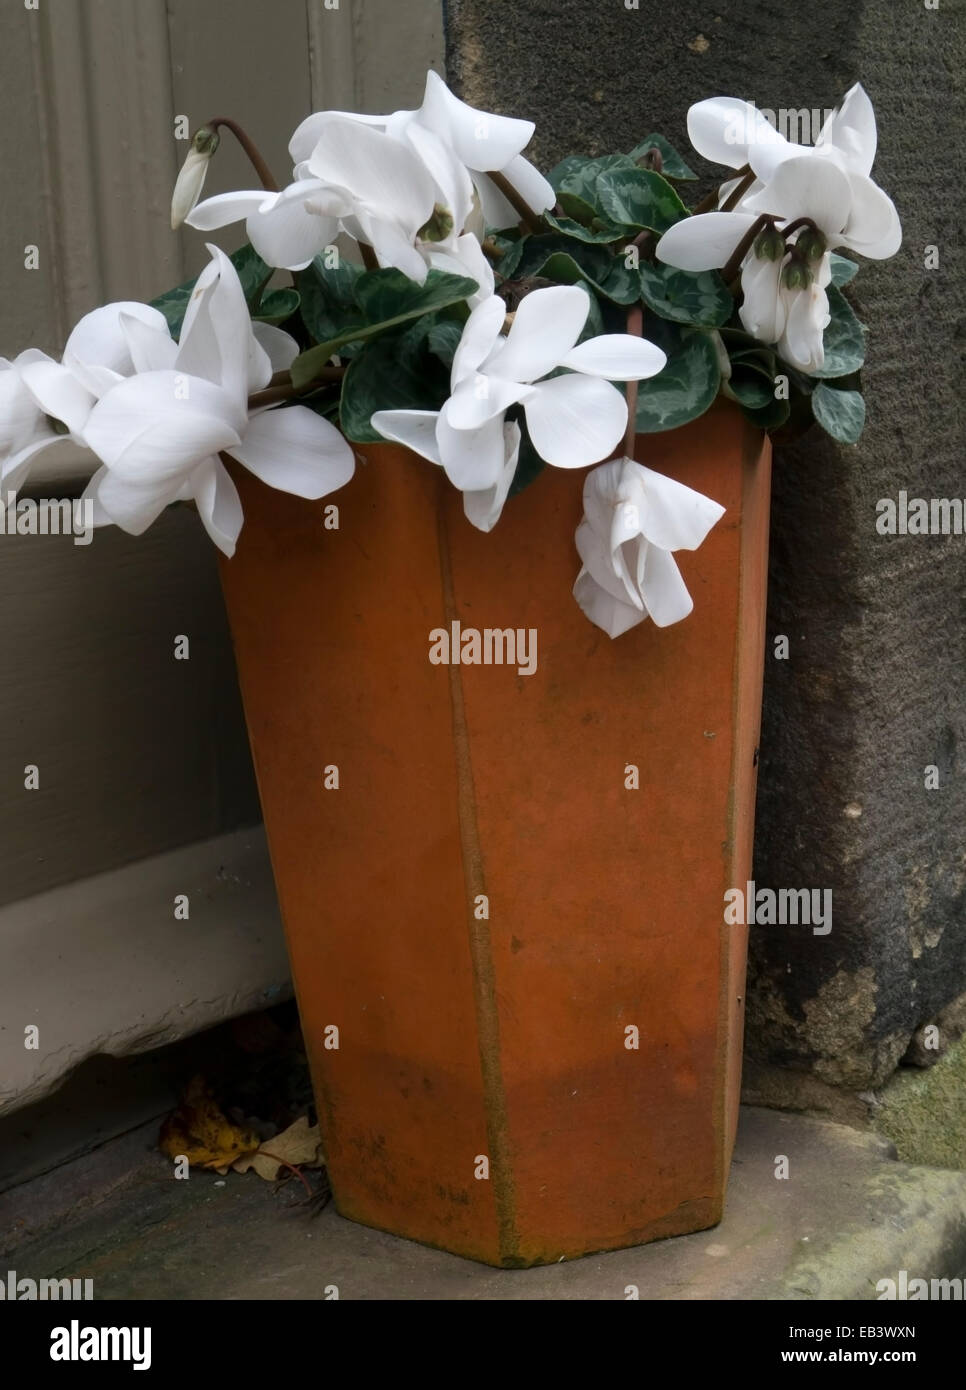 White Cyclamen flowers. Stock Photo